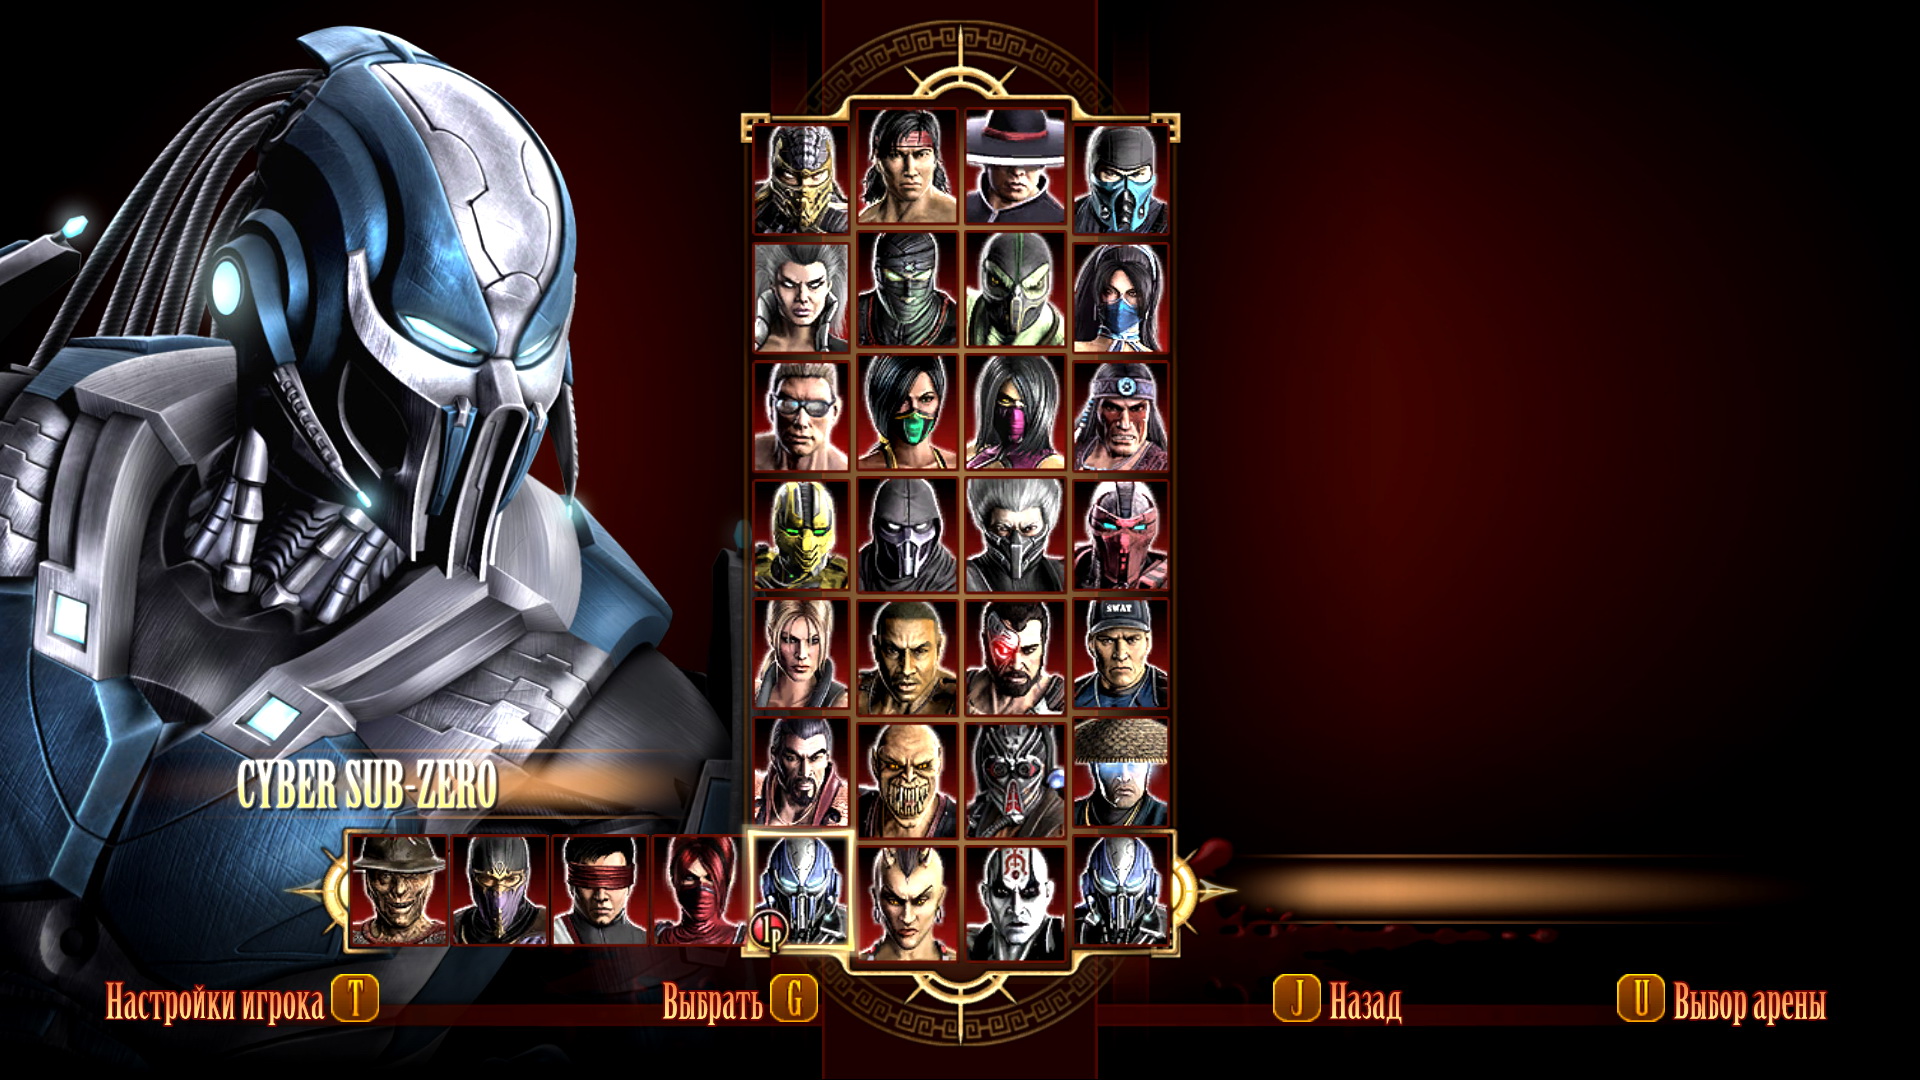 Выборы мортал комбат. Ростер бойцов МК 9. Mk9 Cyber sub Zero. Мортал комбат 9 меню выбора персонажа. Mortal Kombat 9 герои.